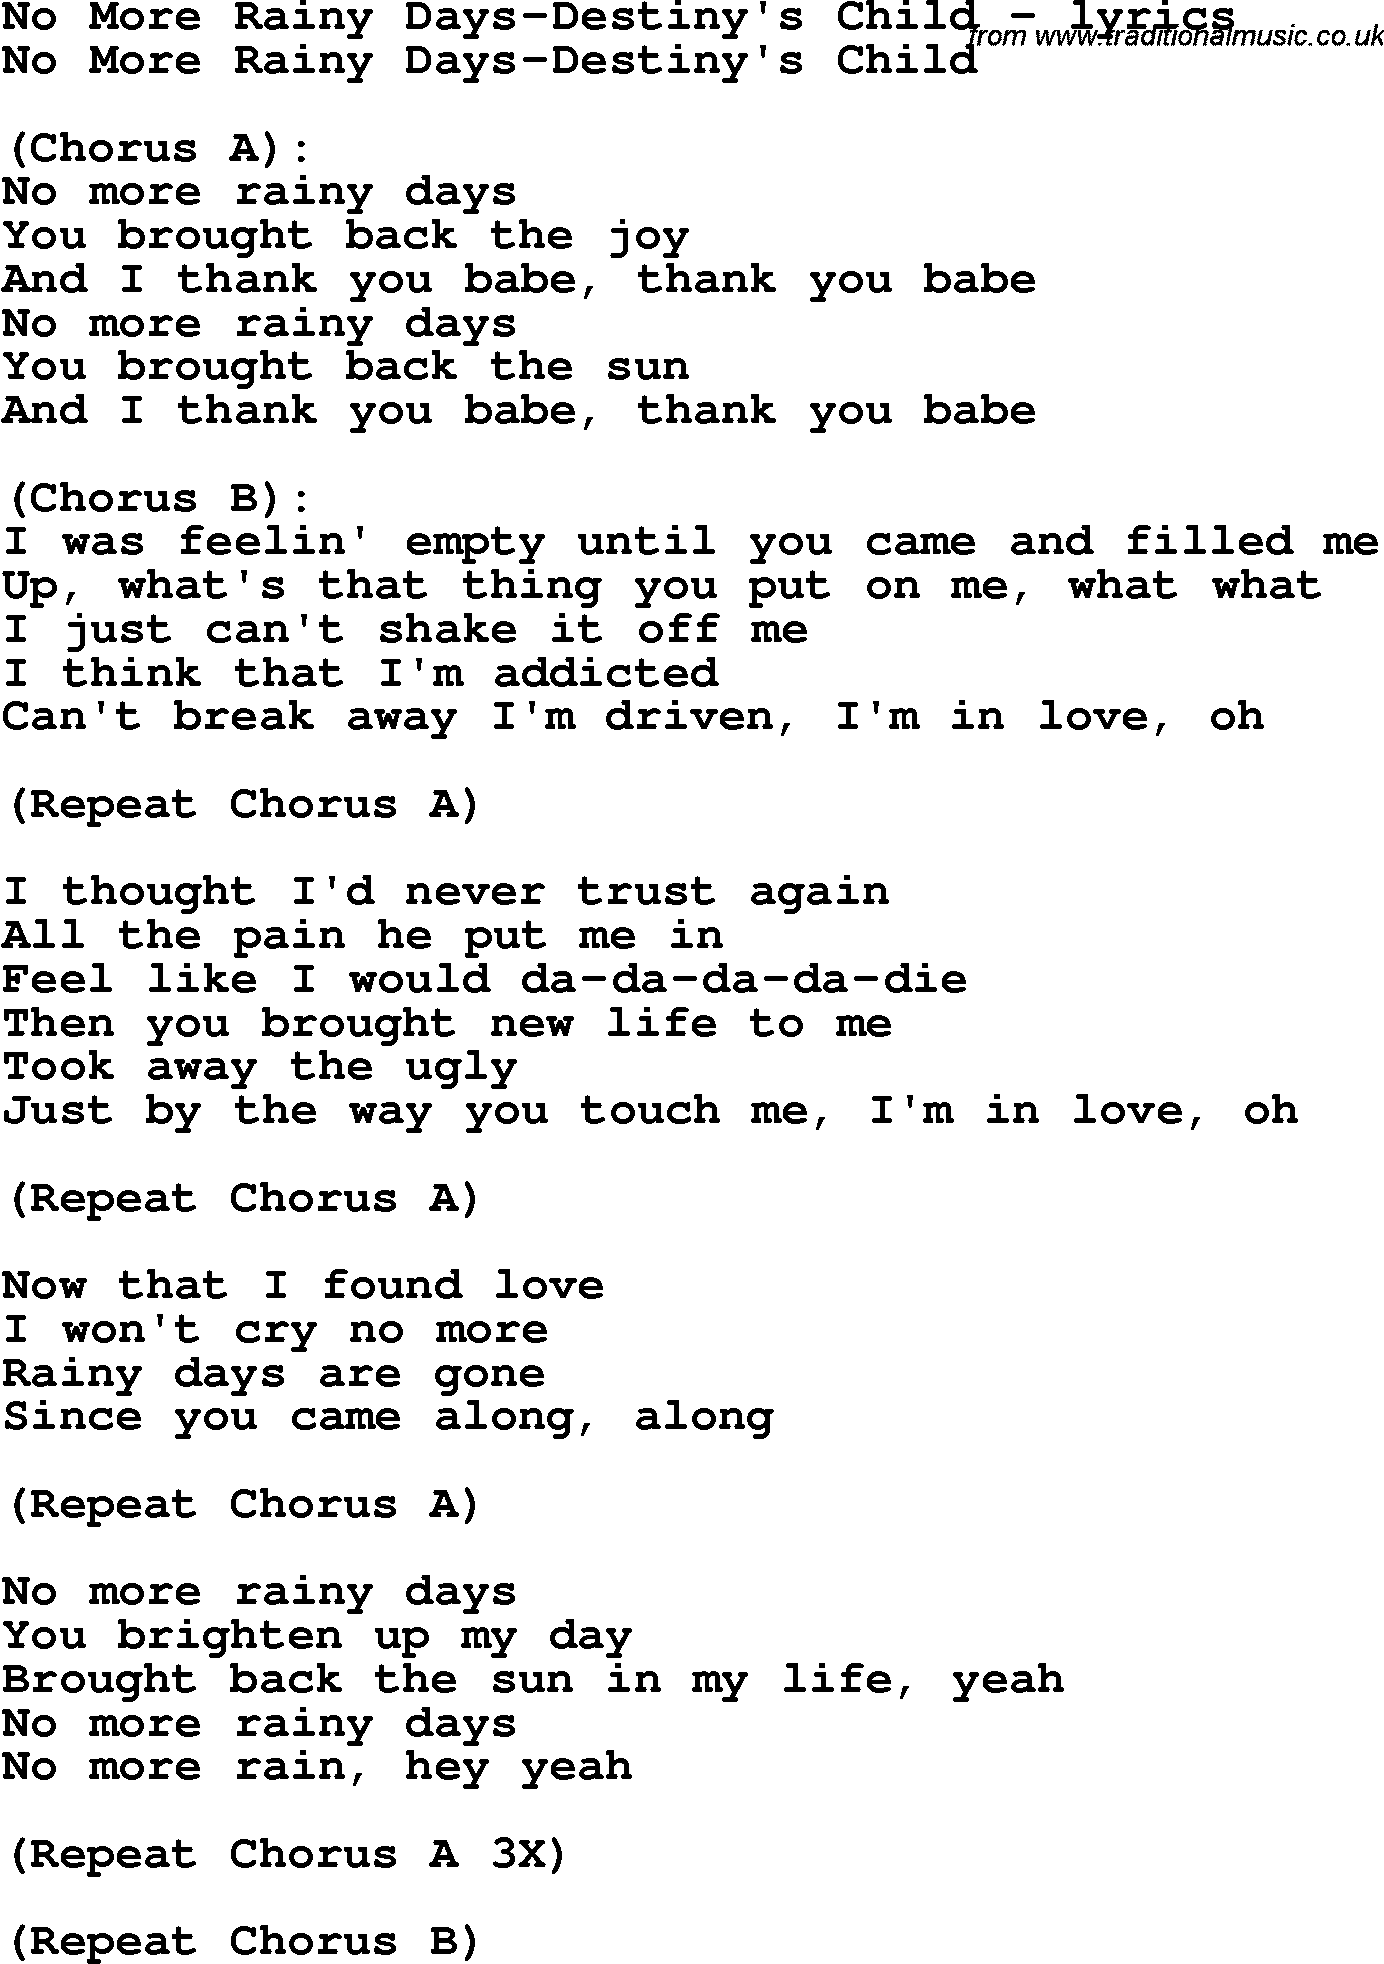 Mttm Dondon - Rainy Days: lyrics and songs